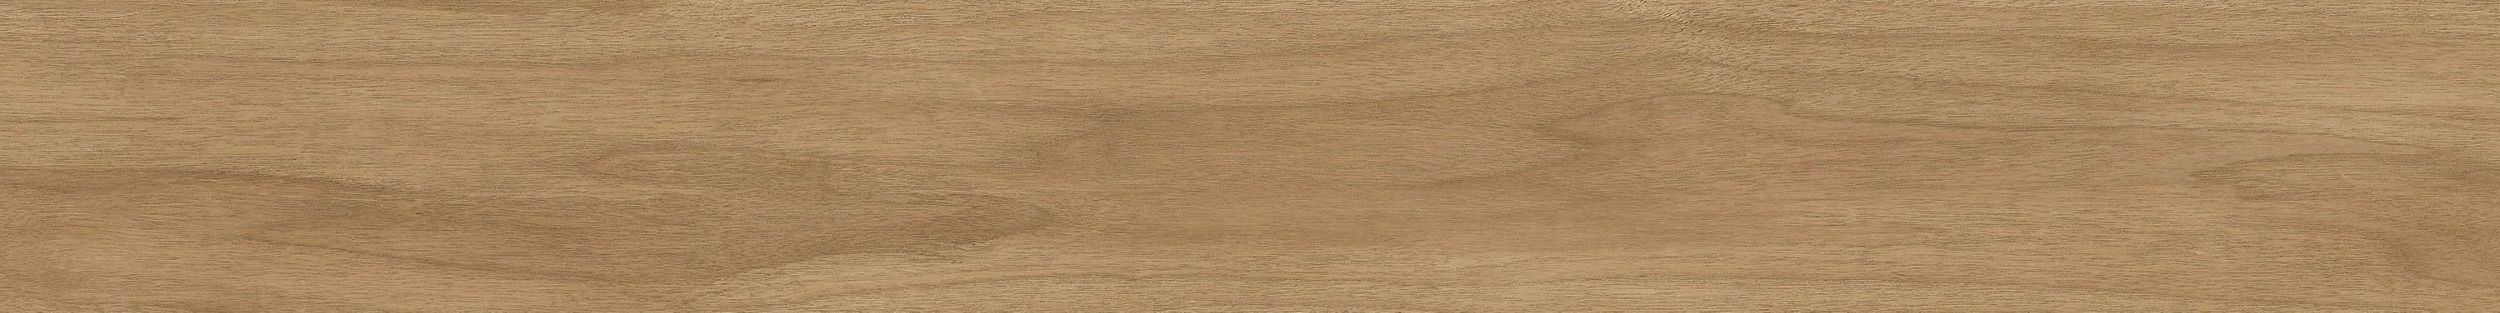 Criterion Classic Woodgrains LVT In Washed Maple numéro d’image 2